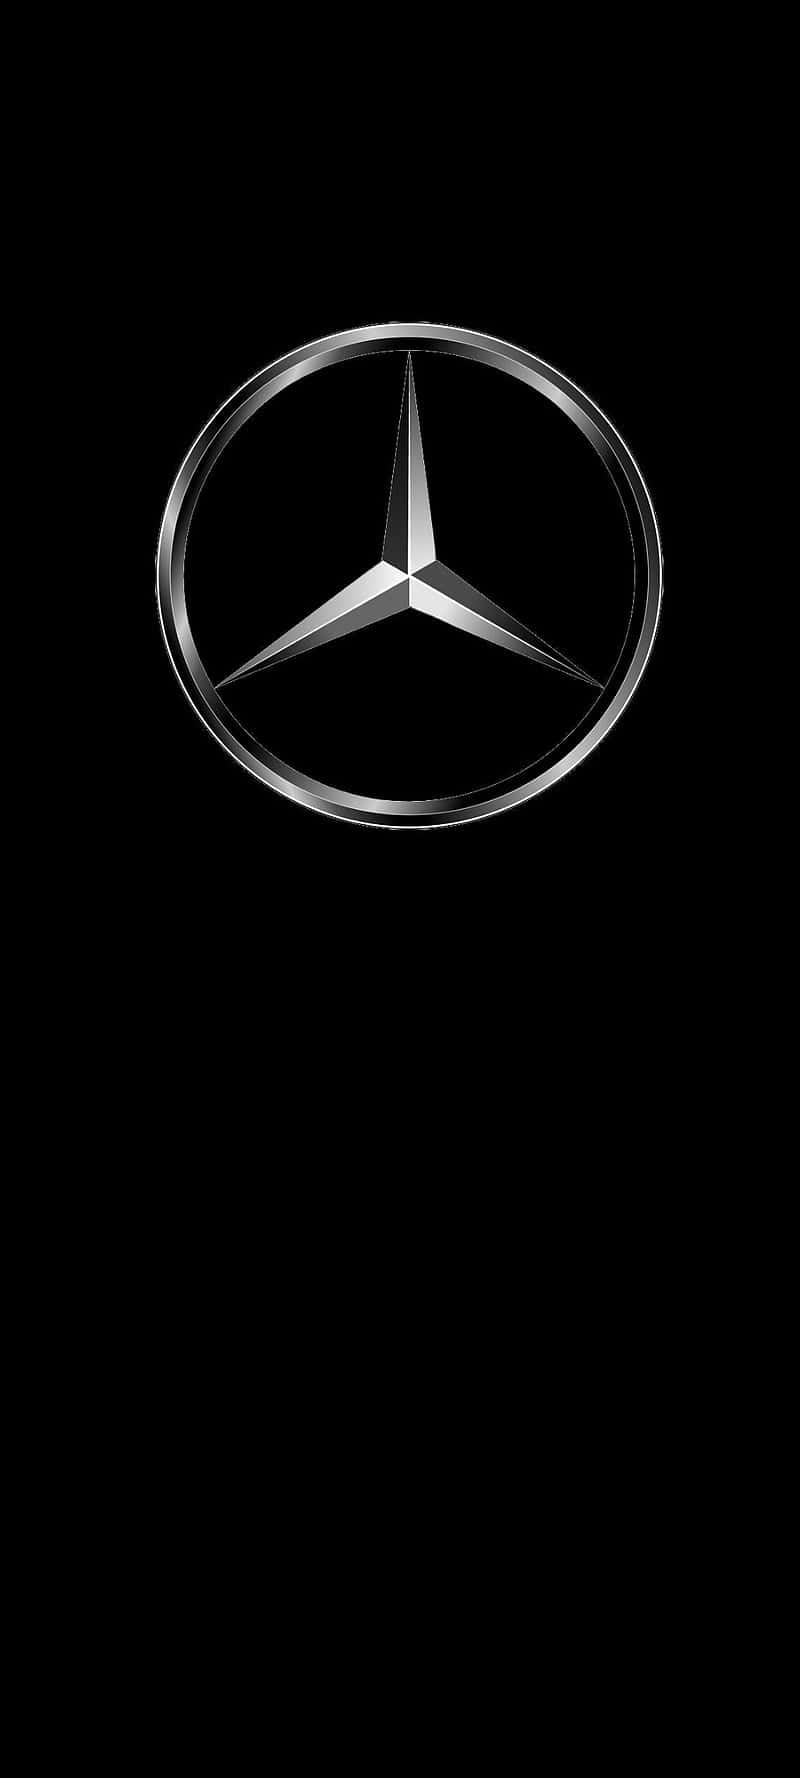 Mercedes benz logo brand symbol with name black Vector Image